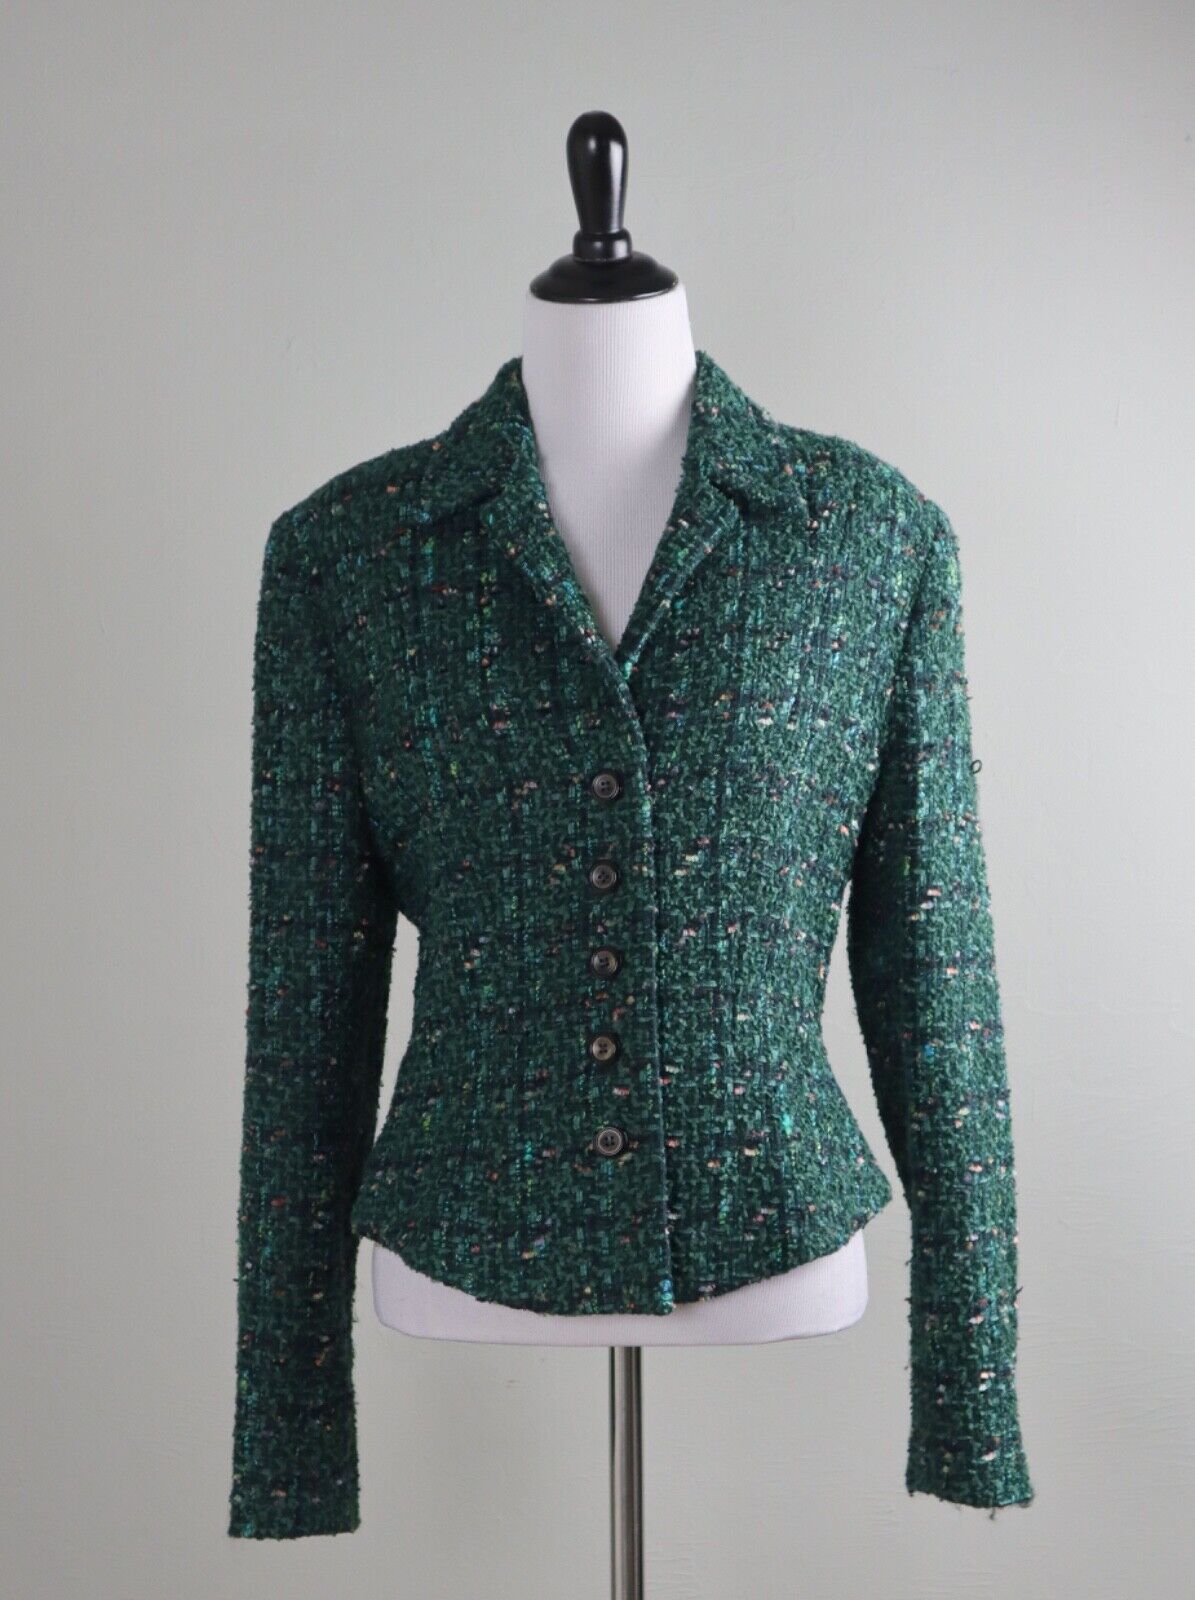 CARLISLE $498 Green Textured Fringe Tweed Wool Structured Jacket Top Size 8